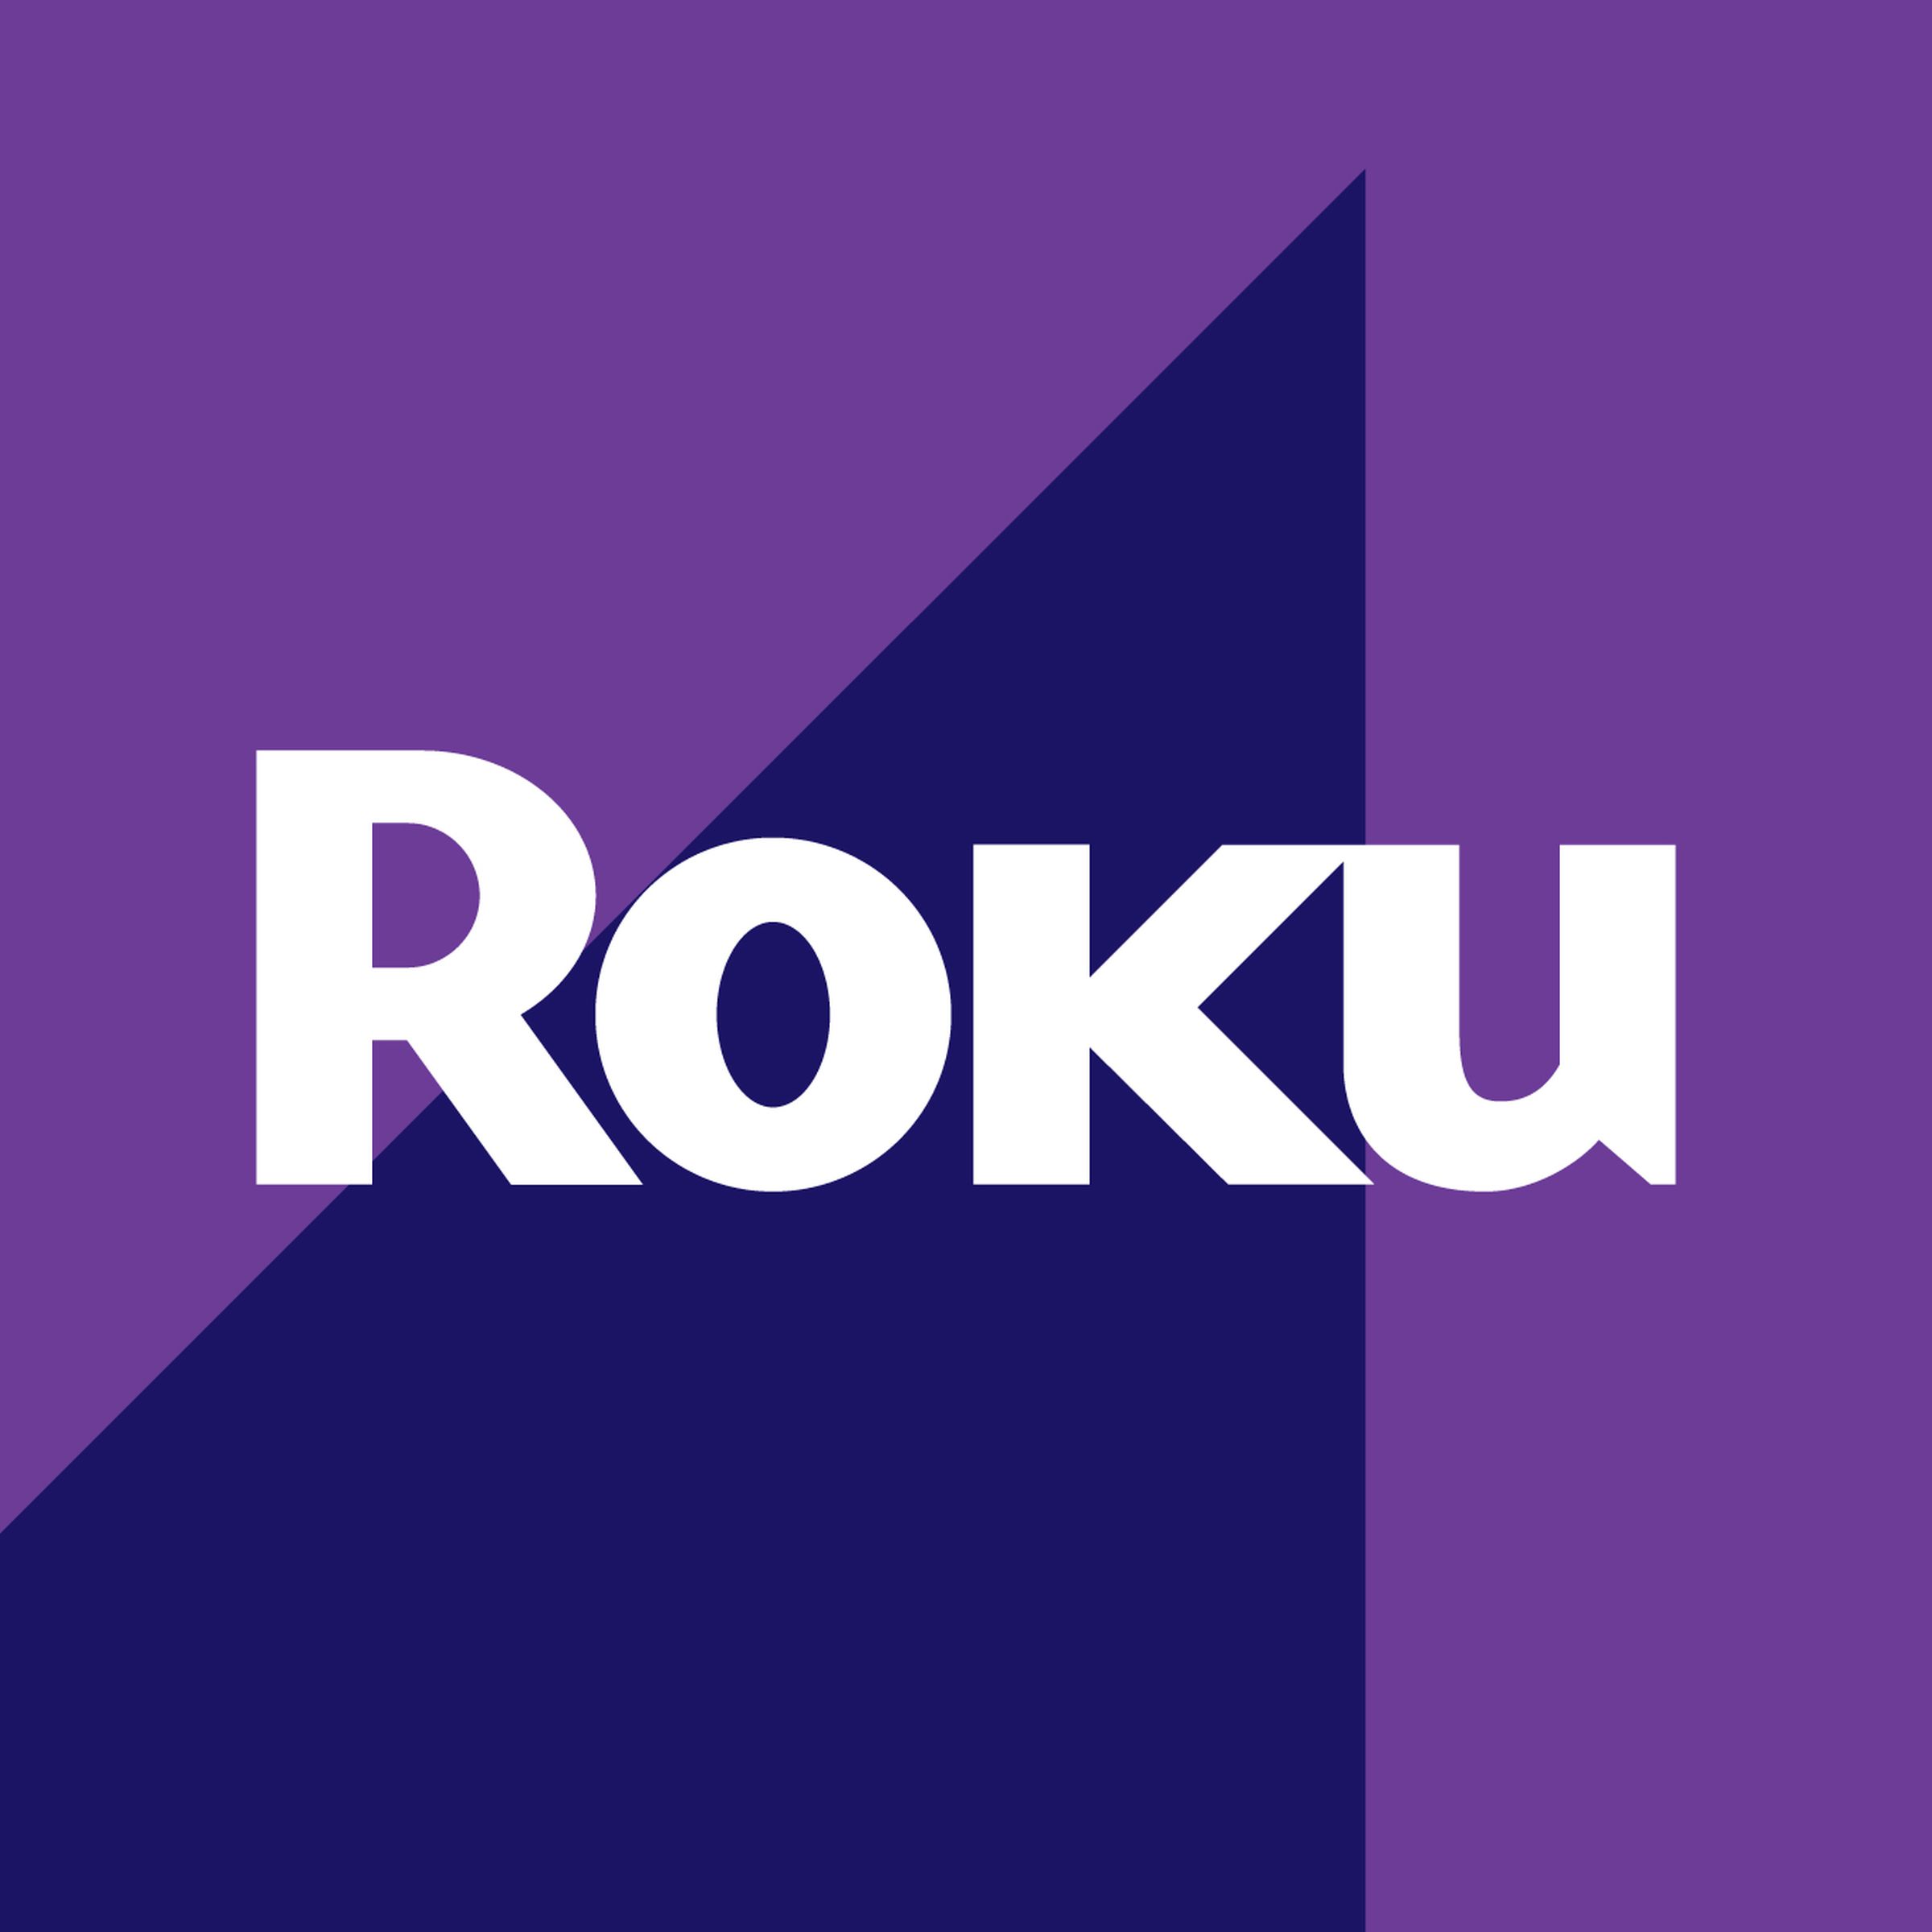 Vector collage of the Roku logo.